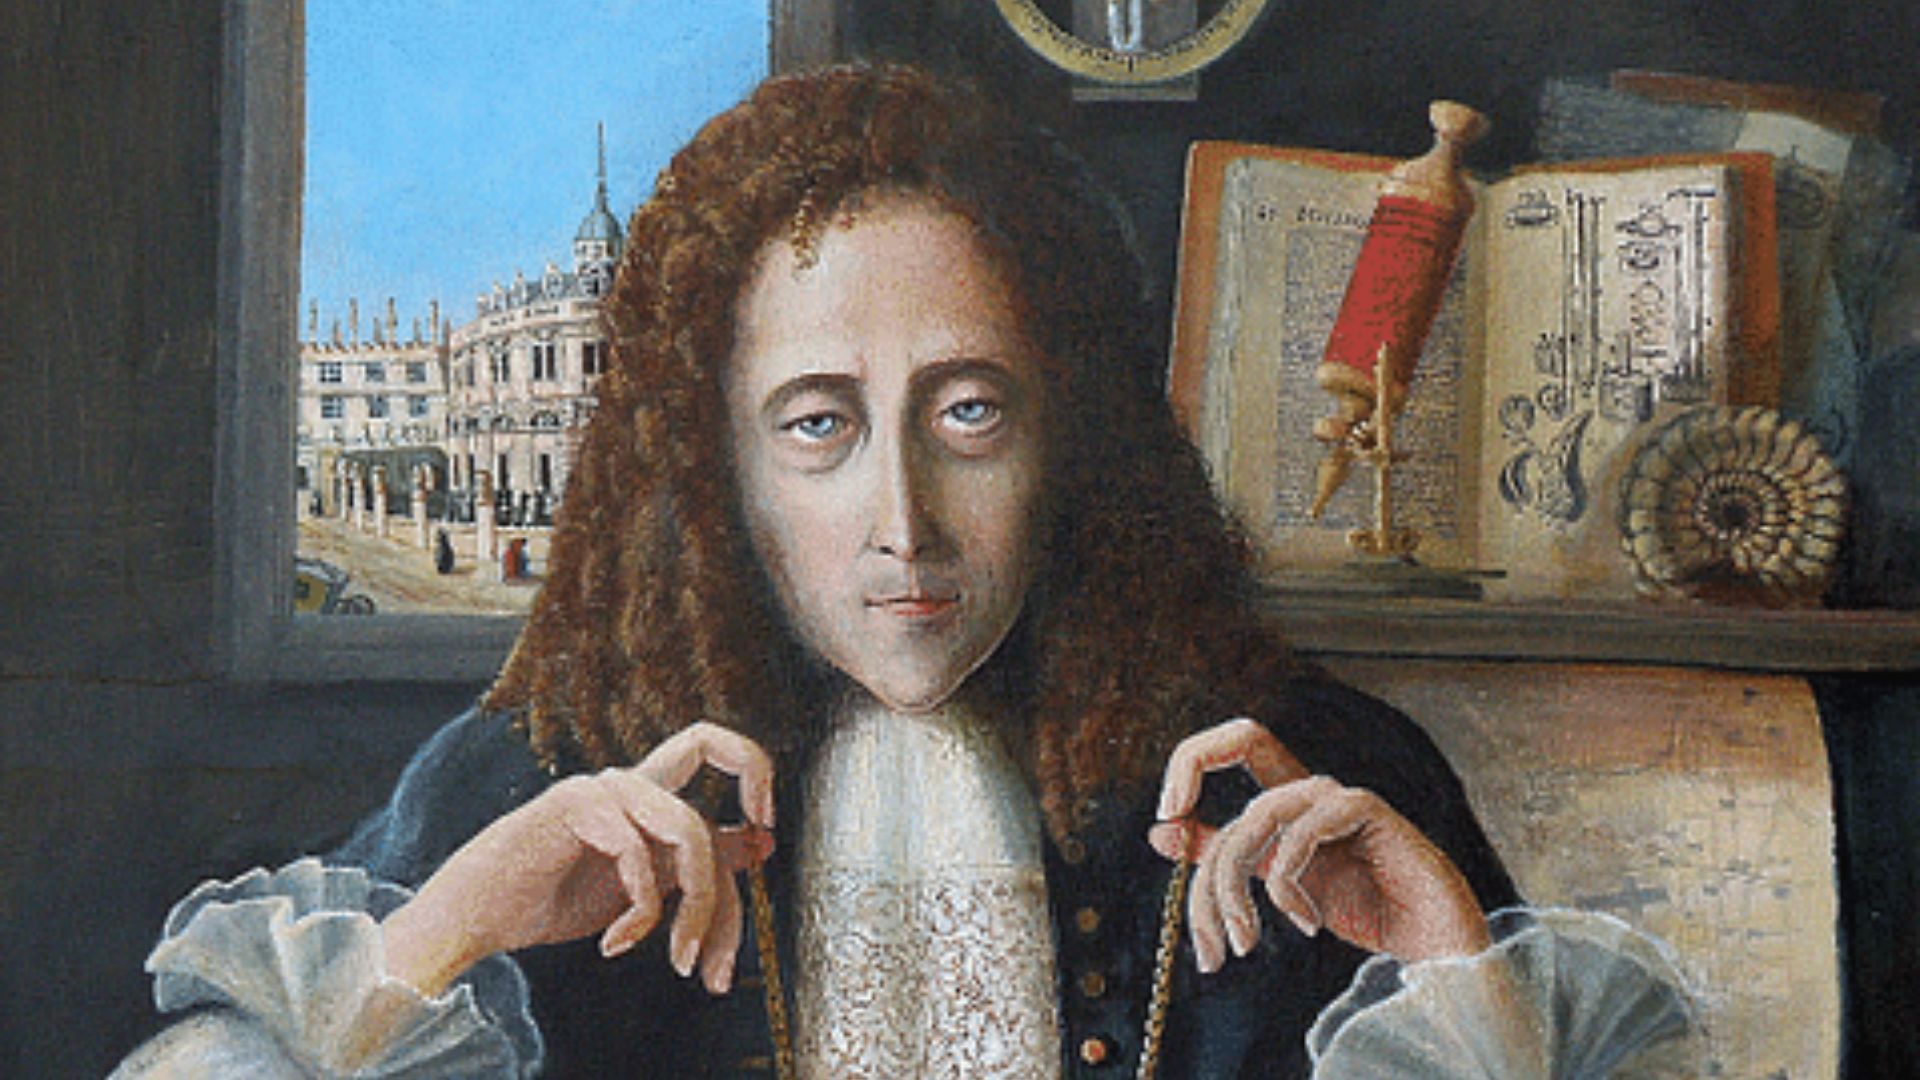 Robert Hooke: Pelopor Sains dan Teknik